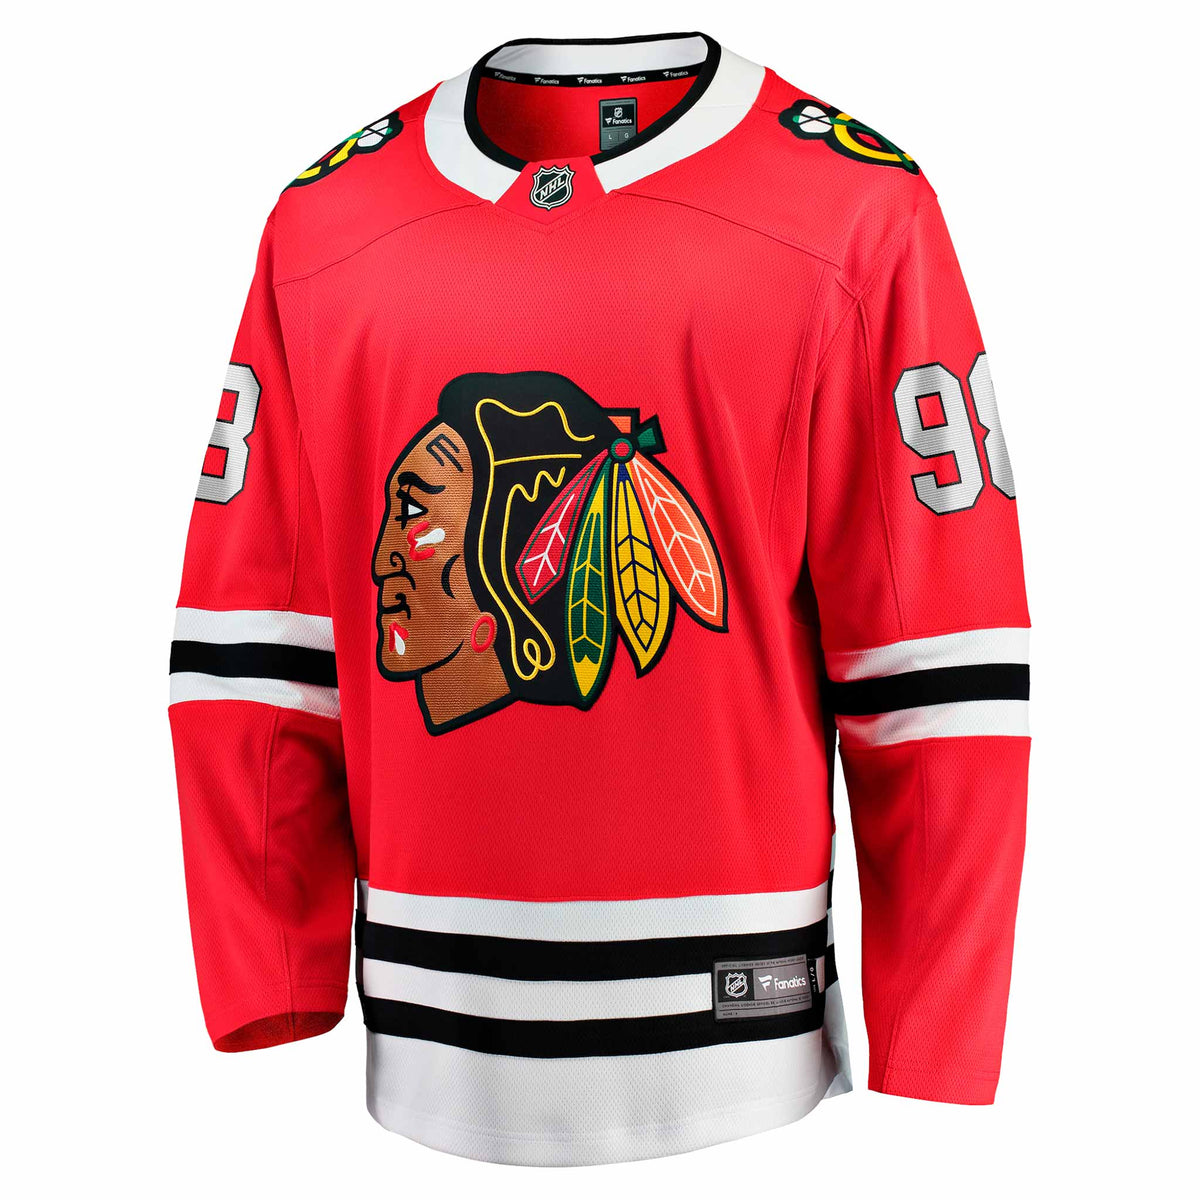 Chicago Blackhawks Connor Bedard Hockey Jersey Red size 52